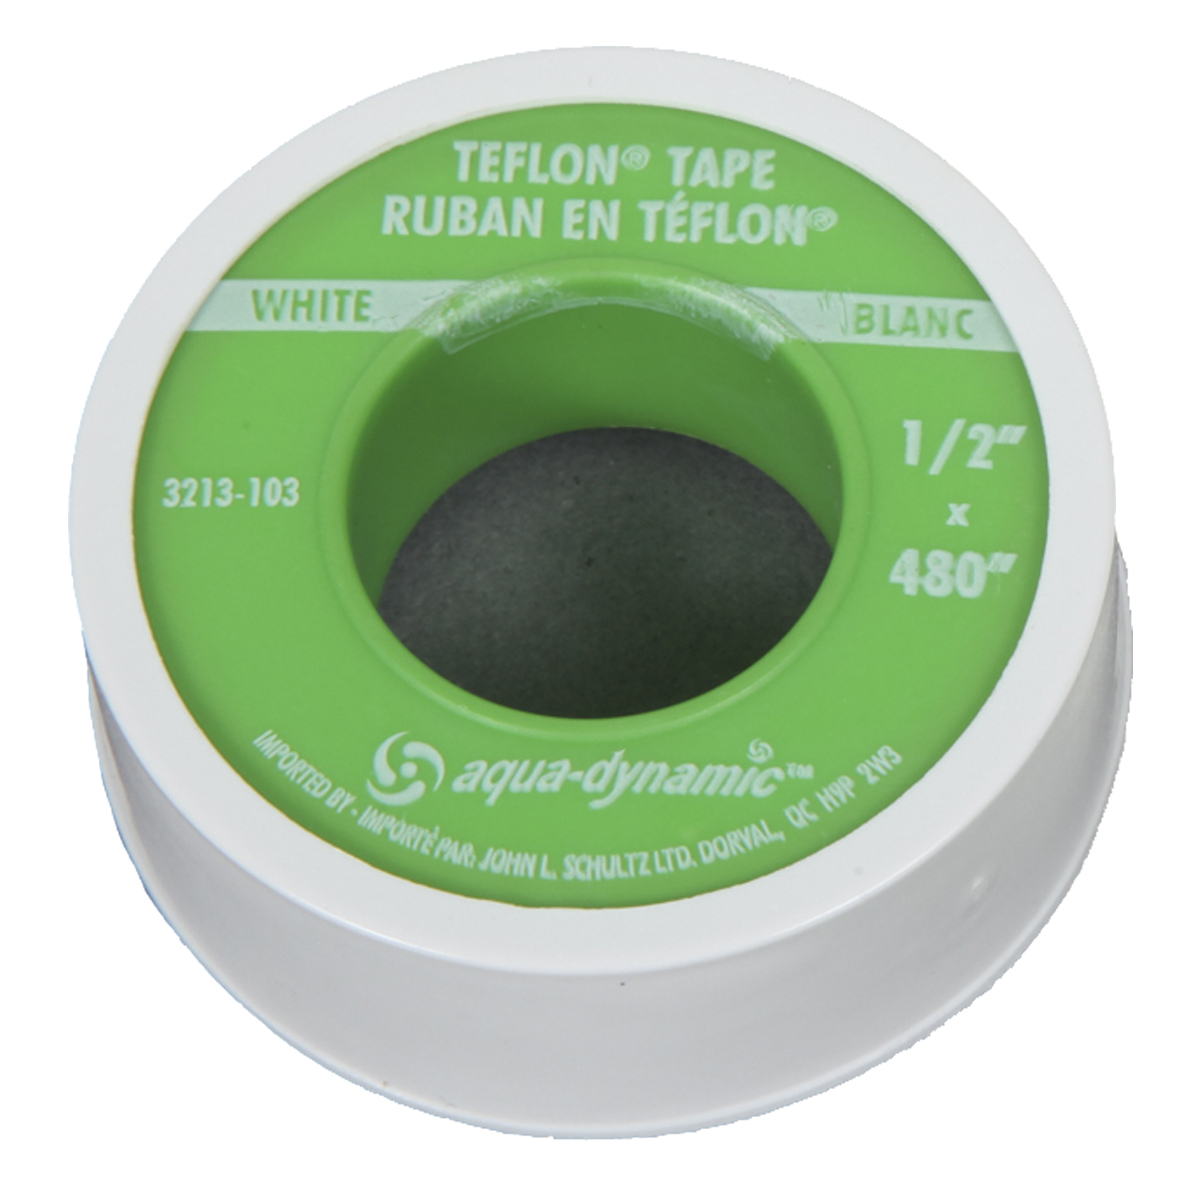 Thread Seal Teflon Tape - 1/2-in x 480-in - White